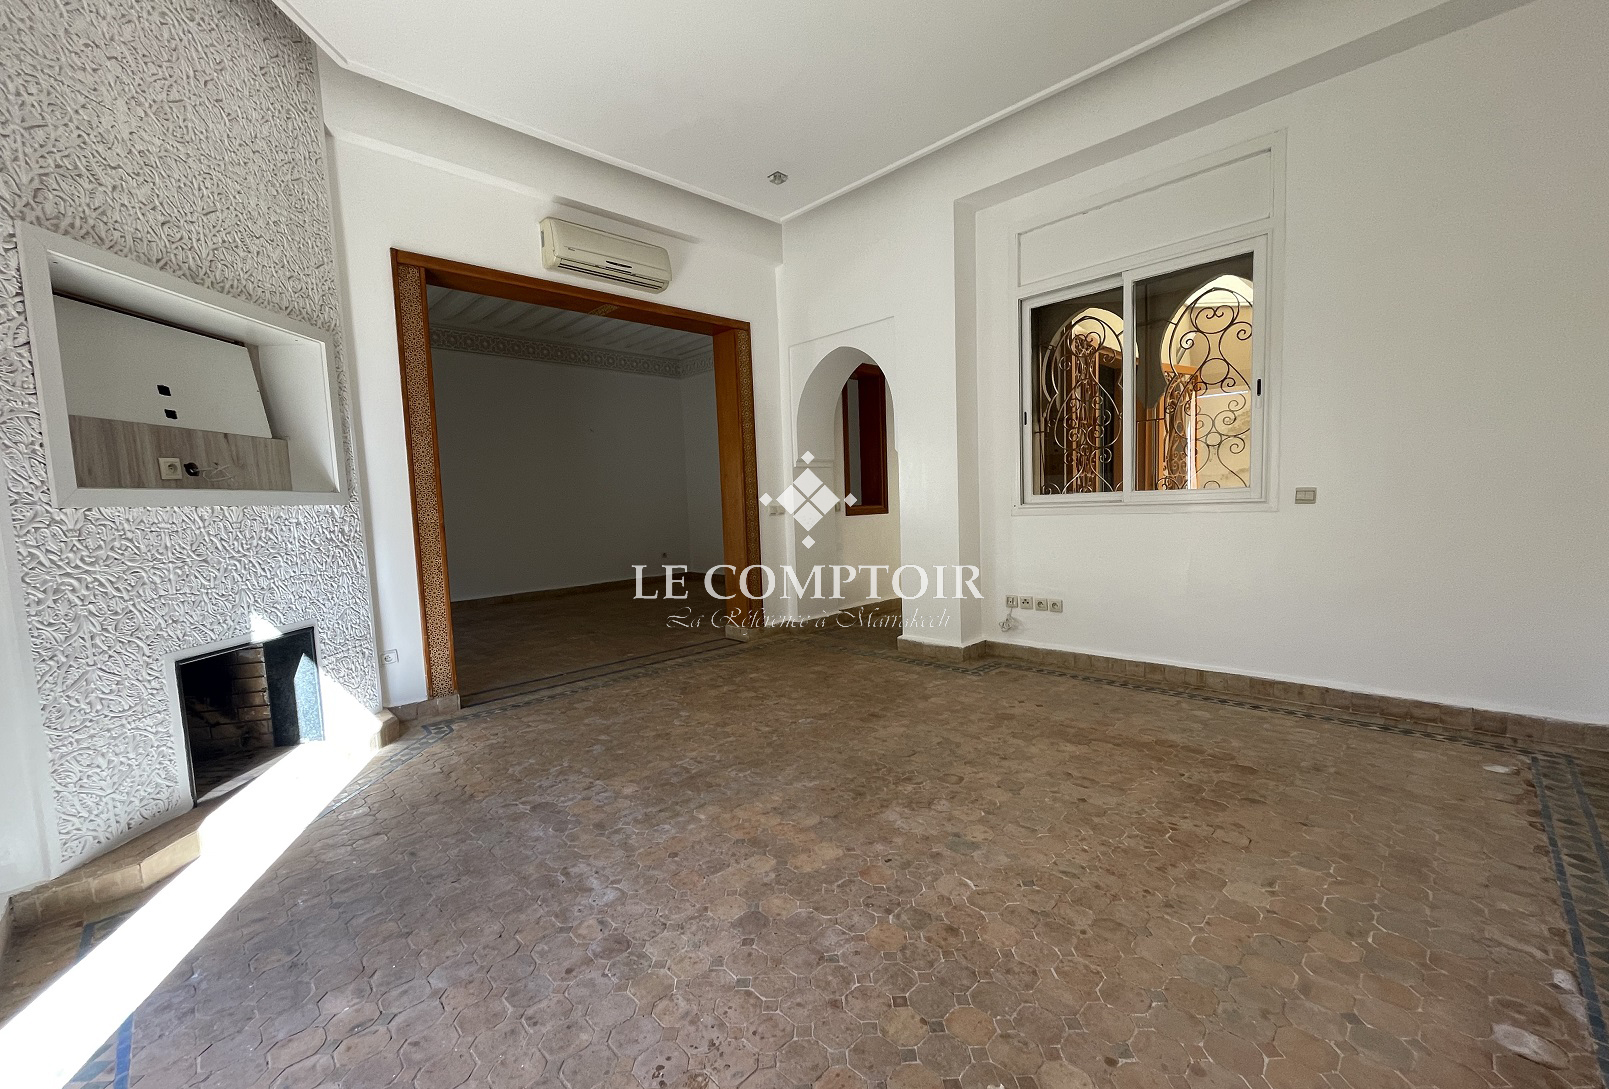 Le Comptoir Immobilier Agence Immobiliere Marrakech Villa Residence Non Meublee Location Marakech Maroc Piscine 4 2